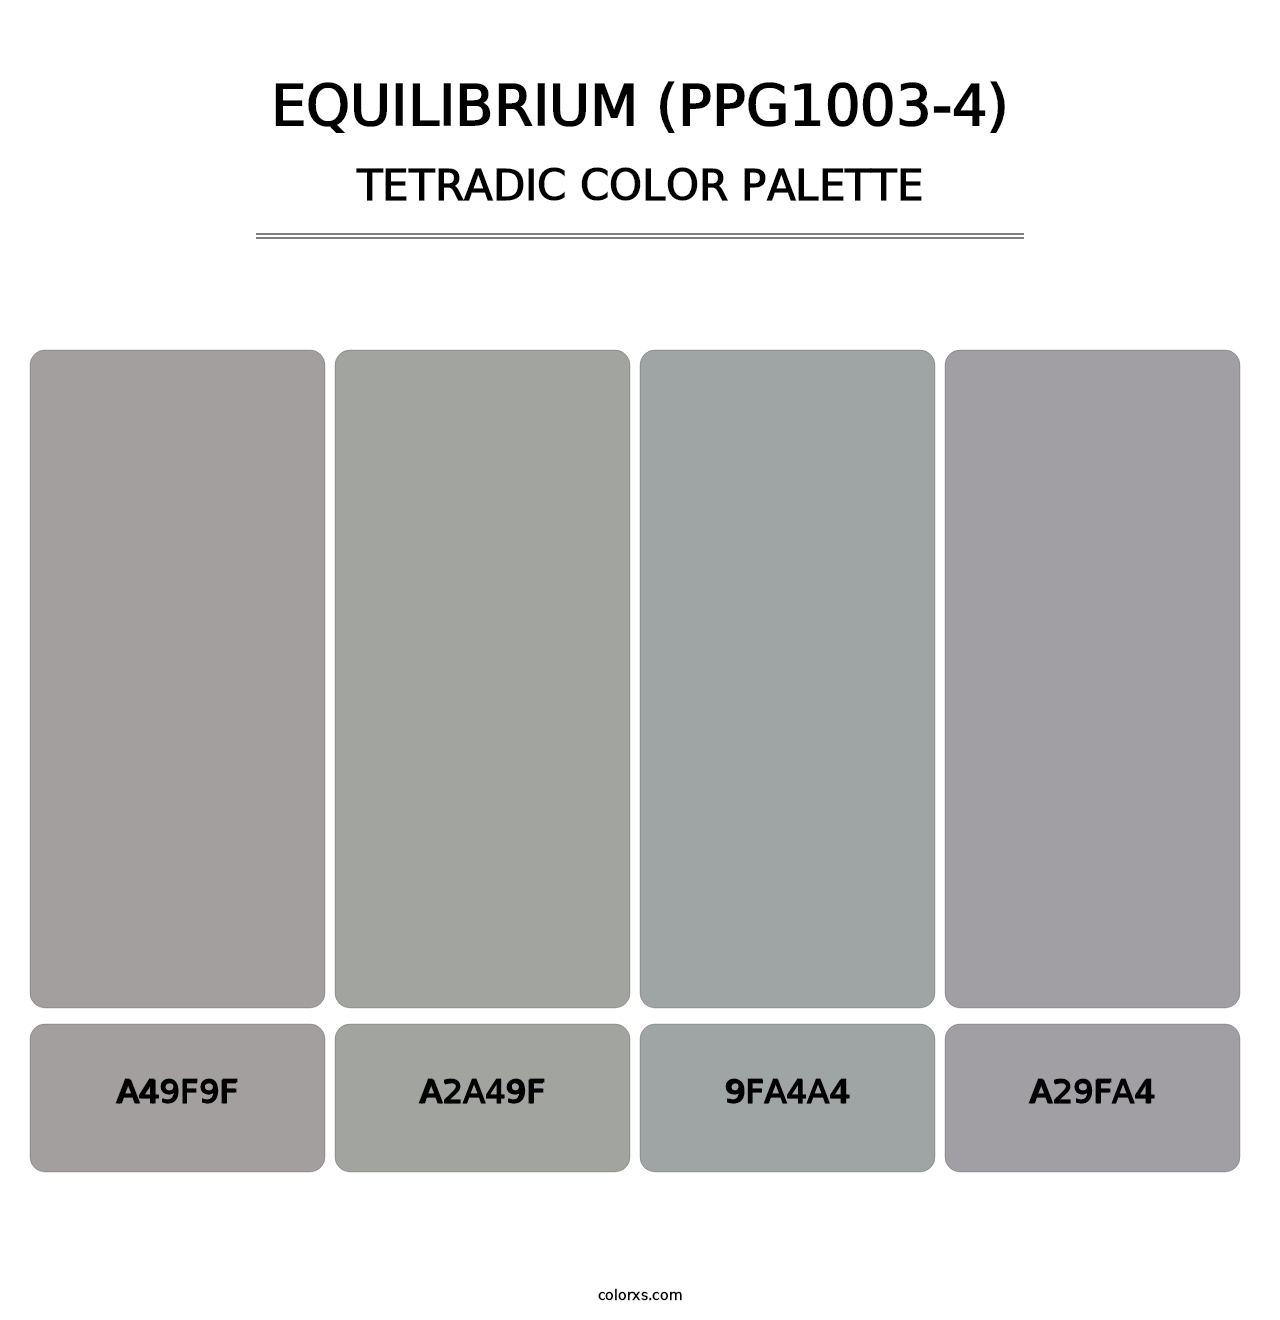 Equilibrium (PPG1003-4) - Tetradic Color Palette